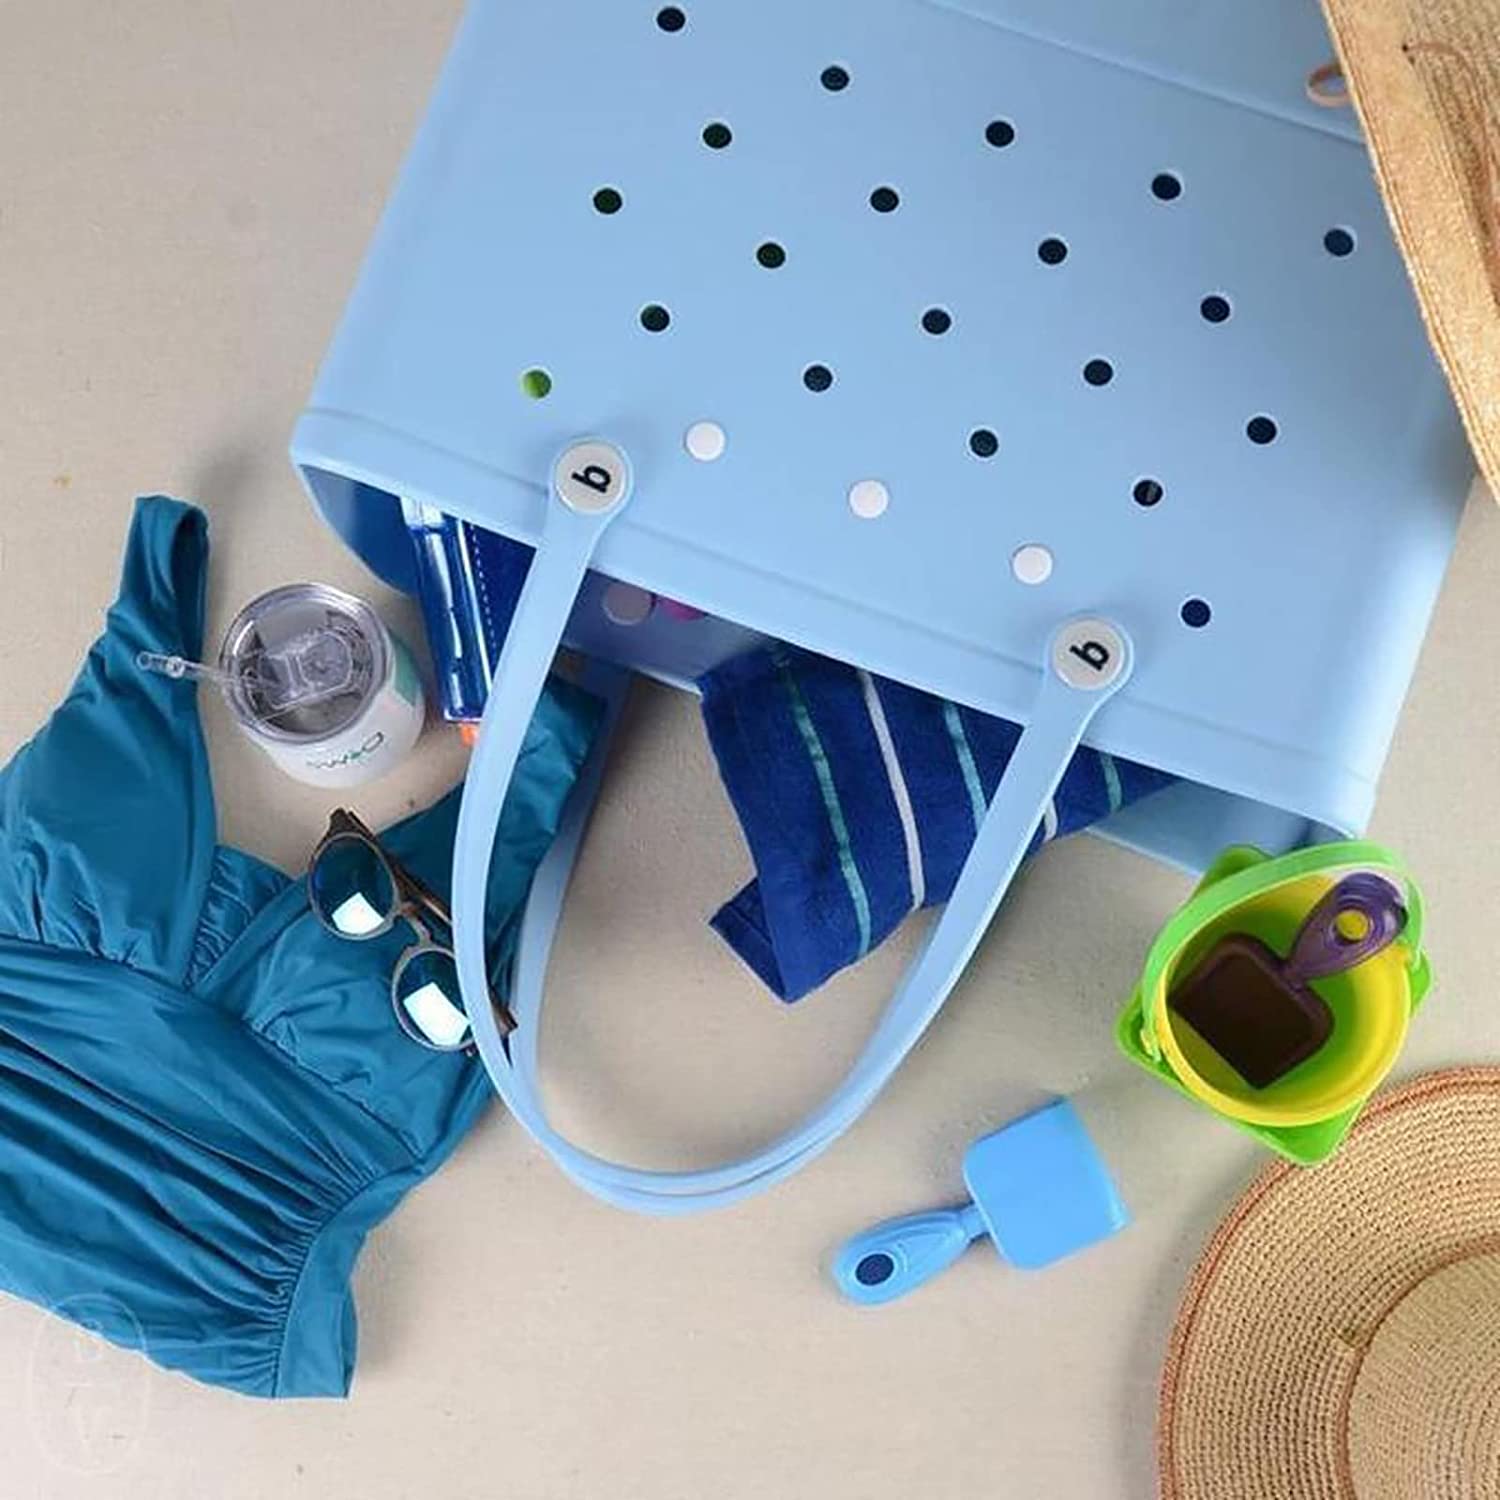 Mini Rubber Summer Beach Tote, EVA Waterproof Handbag, Portable Storage Bogg  Bag For Outdoor Travel & Sports (6.29x8.07x2.95)